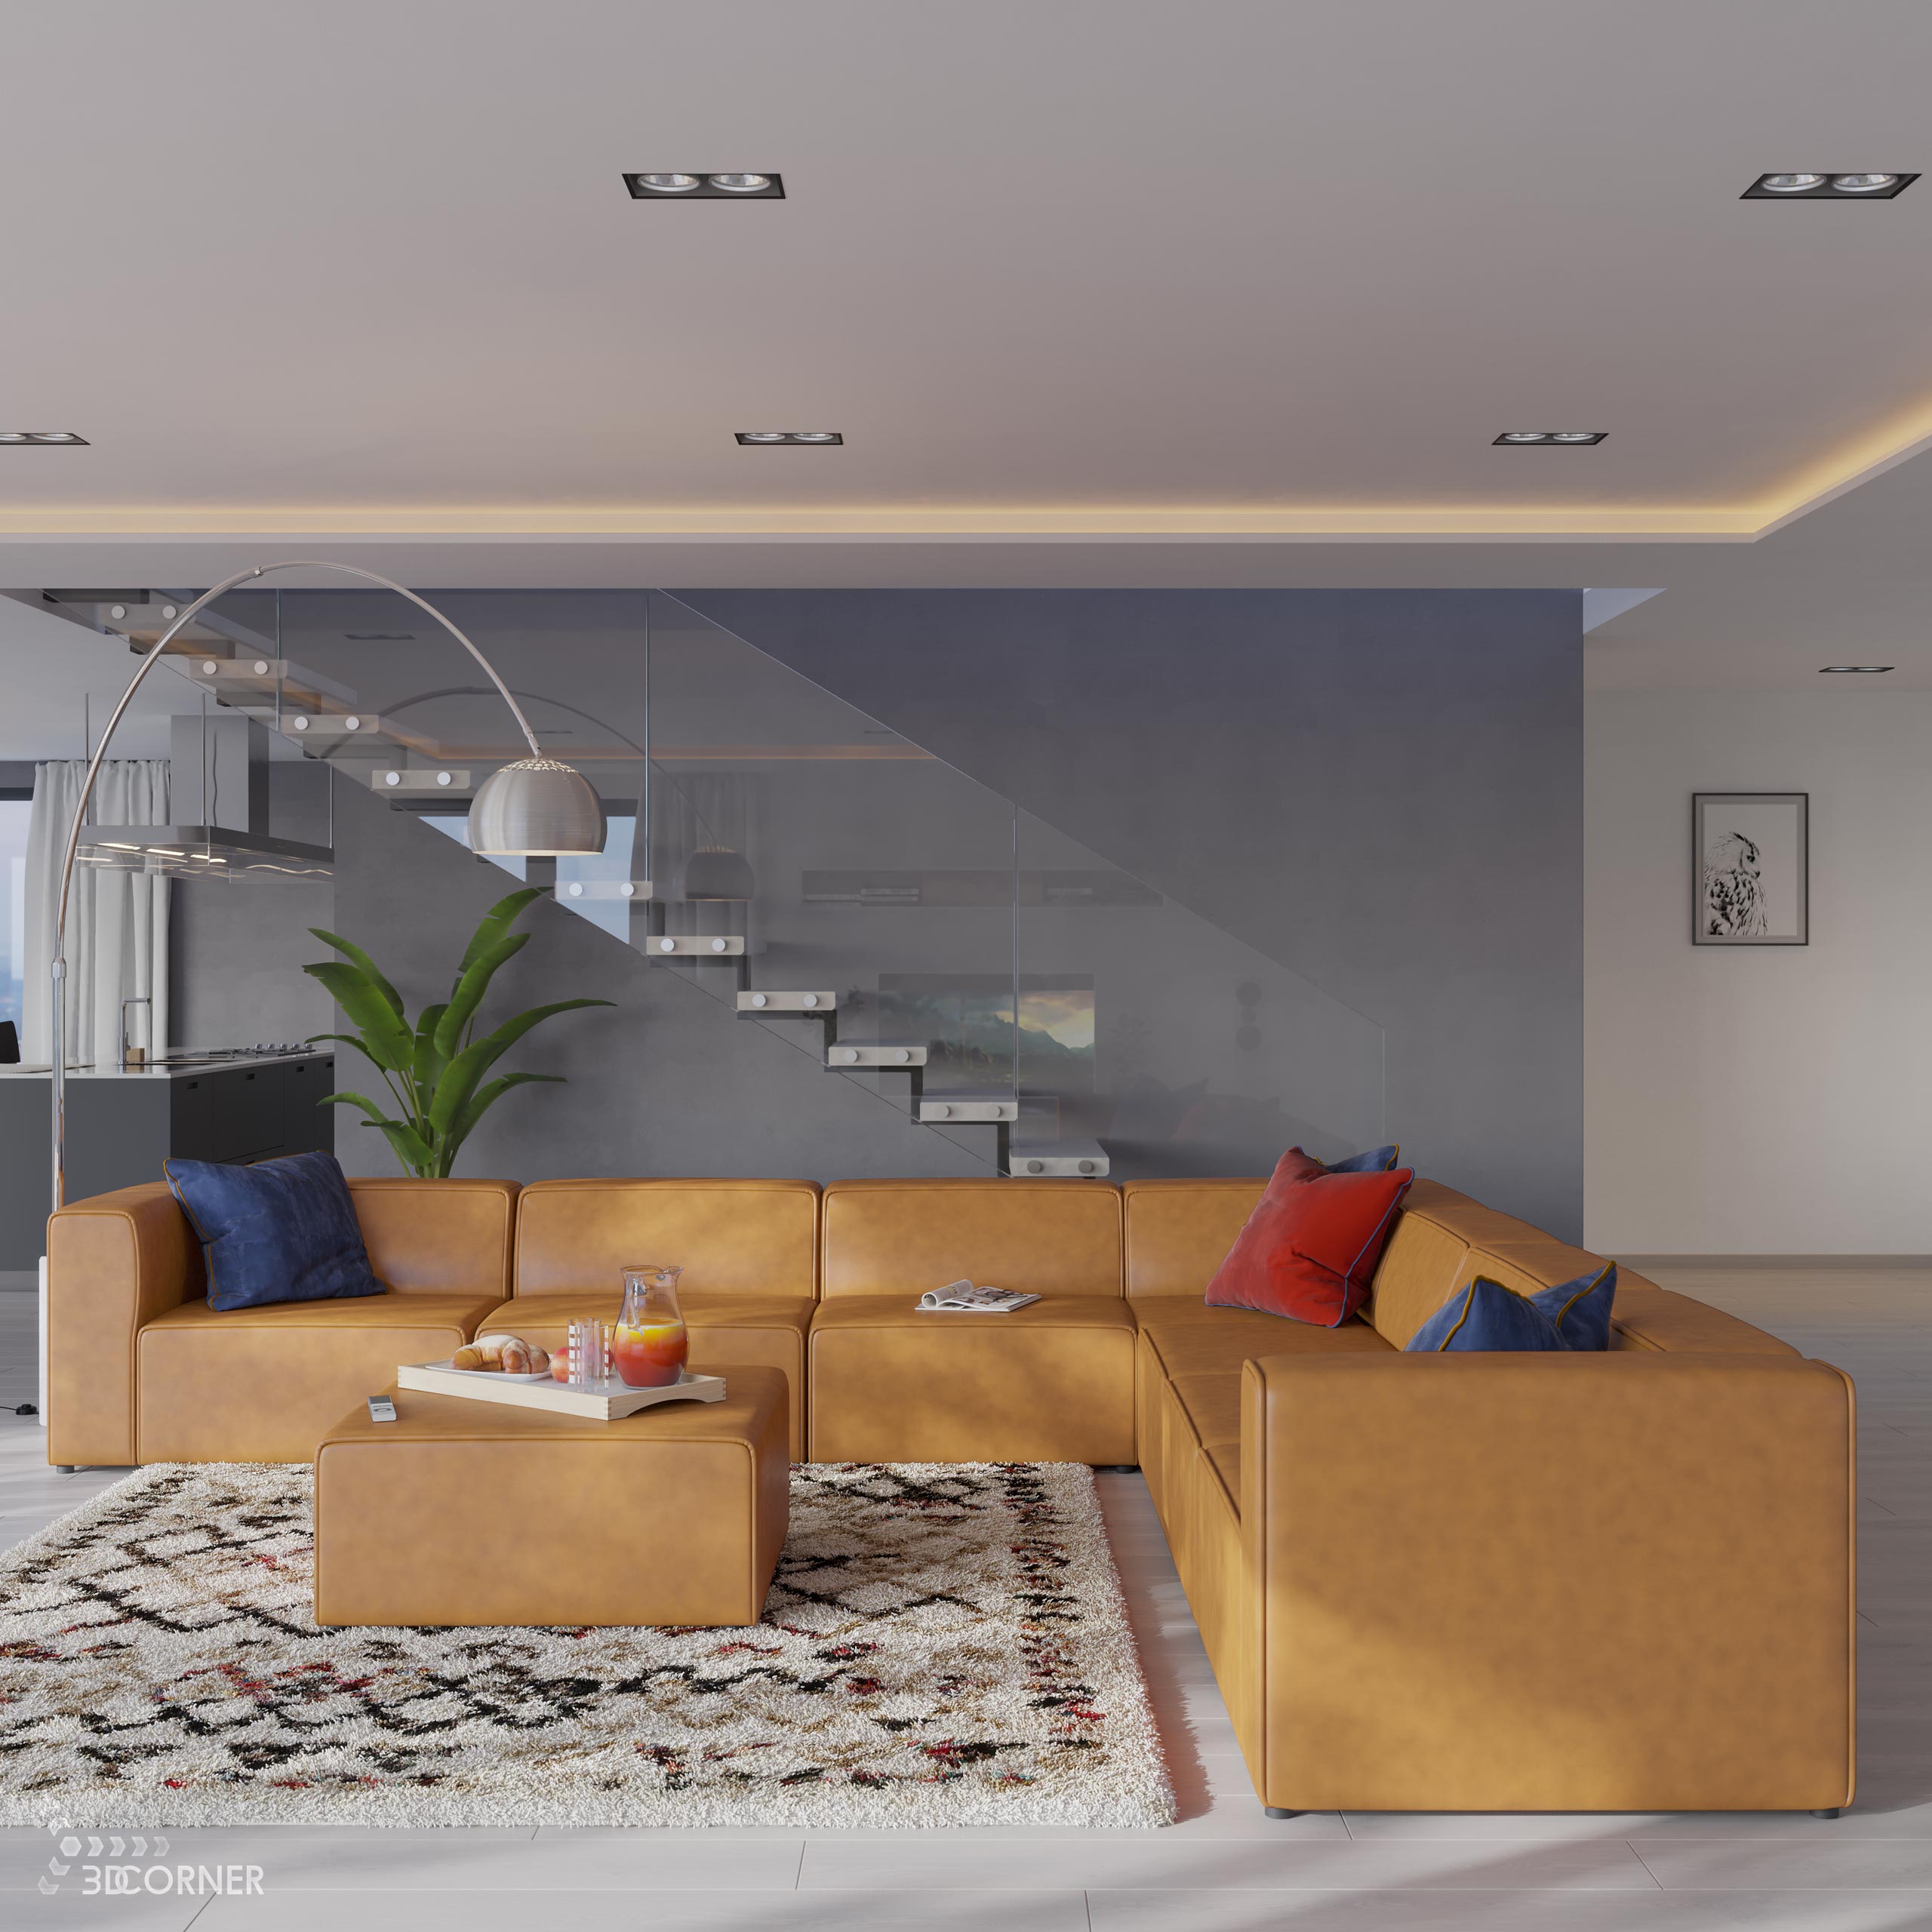 cgi 3d visualization rendering archviz contemporary furniture product 3dcorner